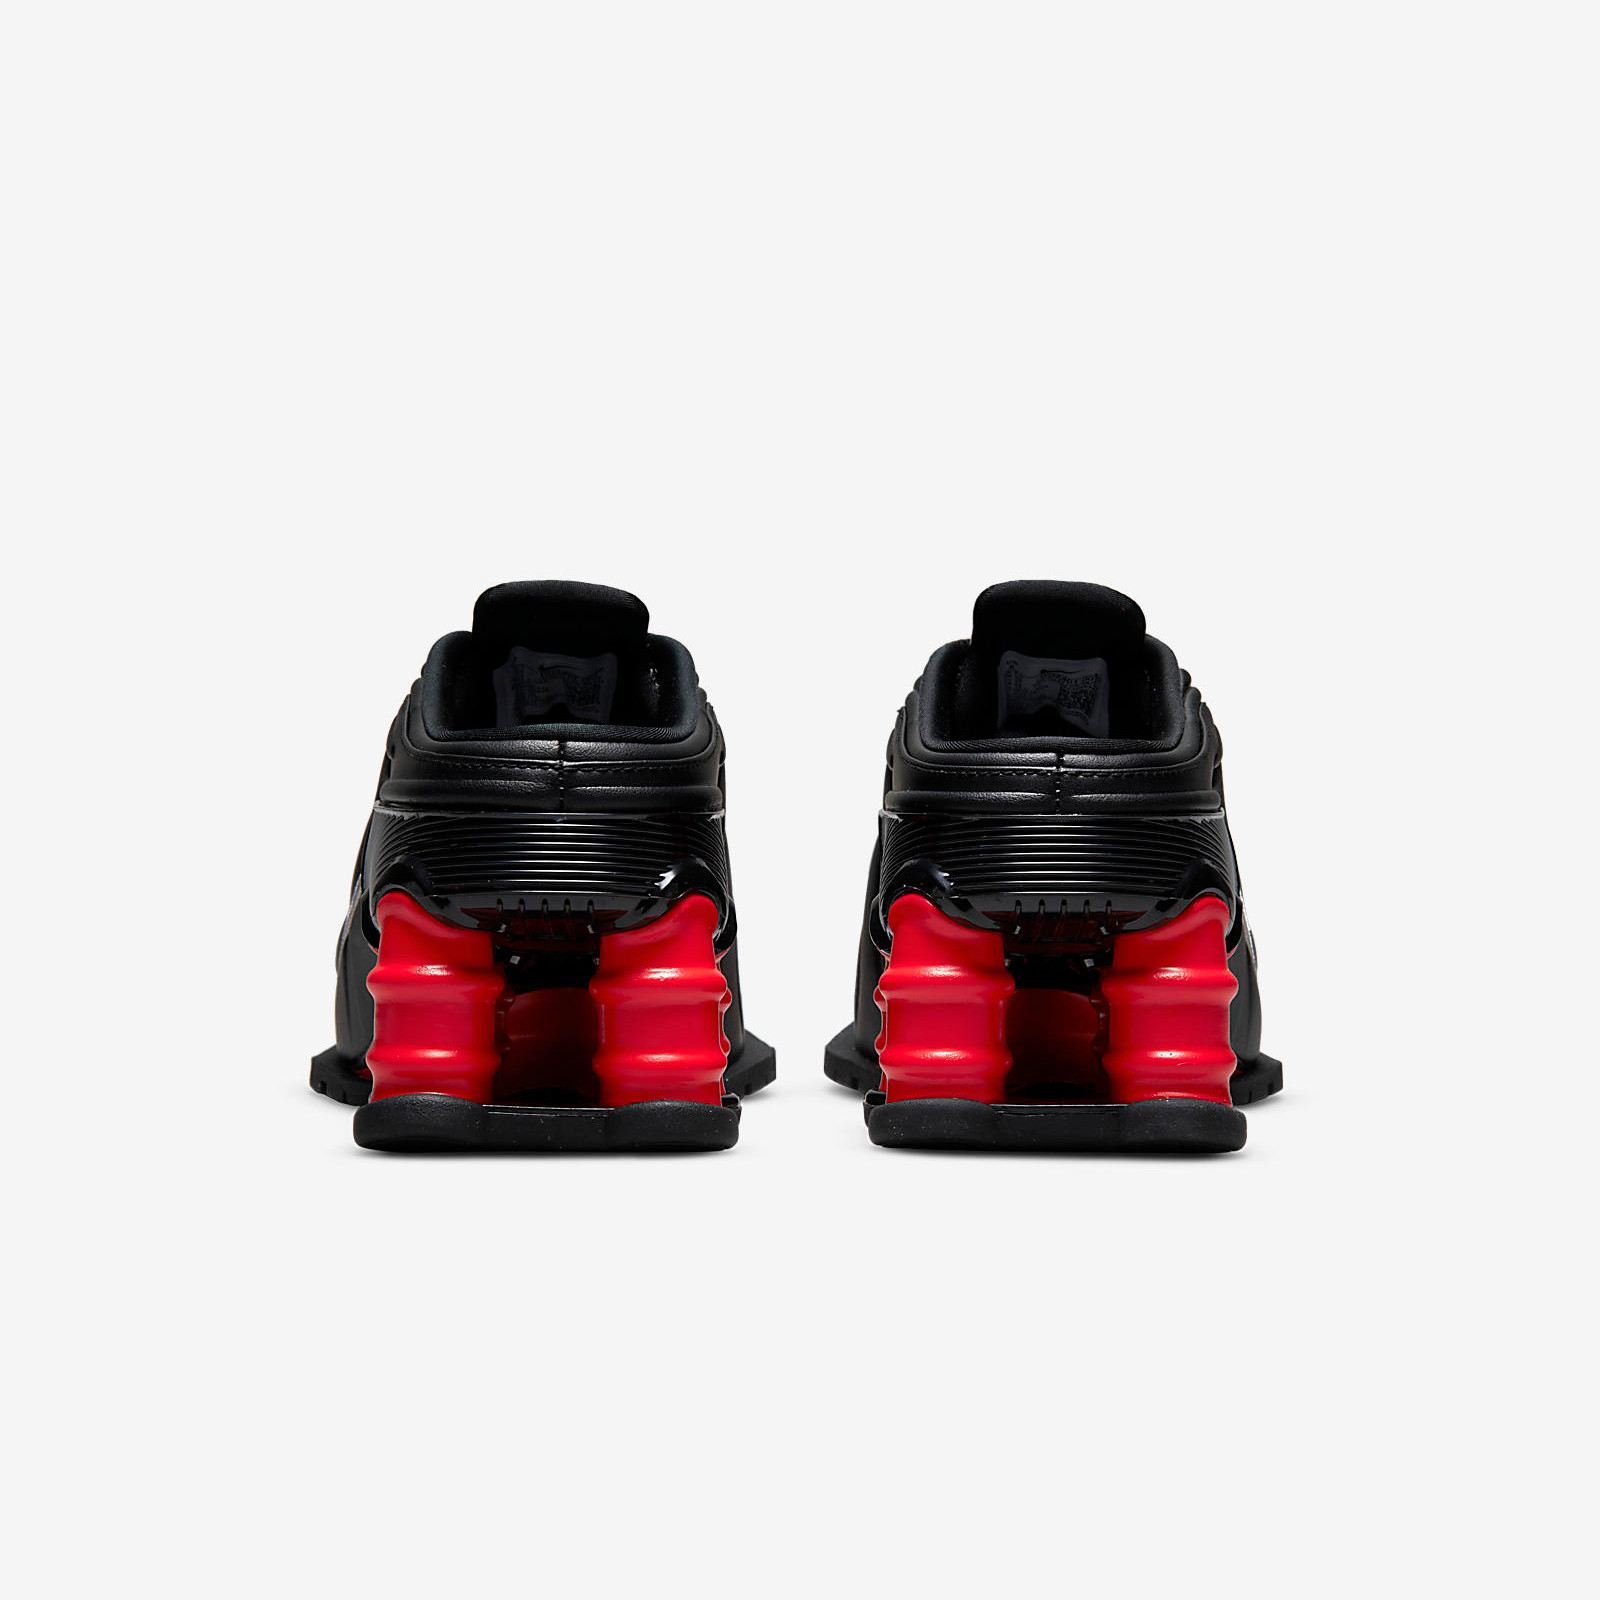 Martine Rose x Nike
Shox MR4
Black / Comet Red